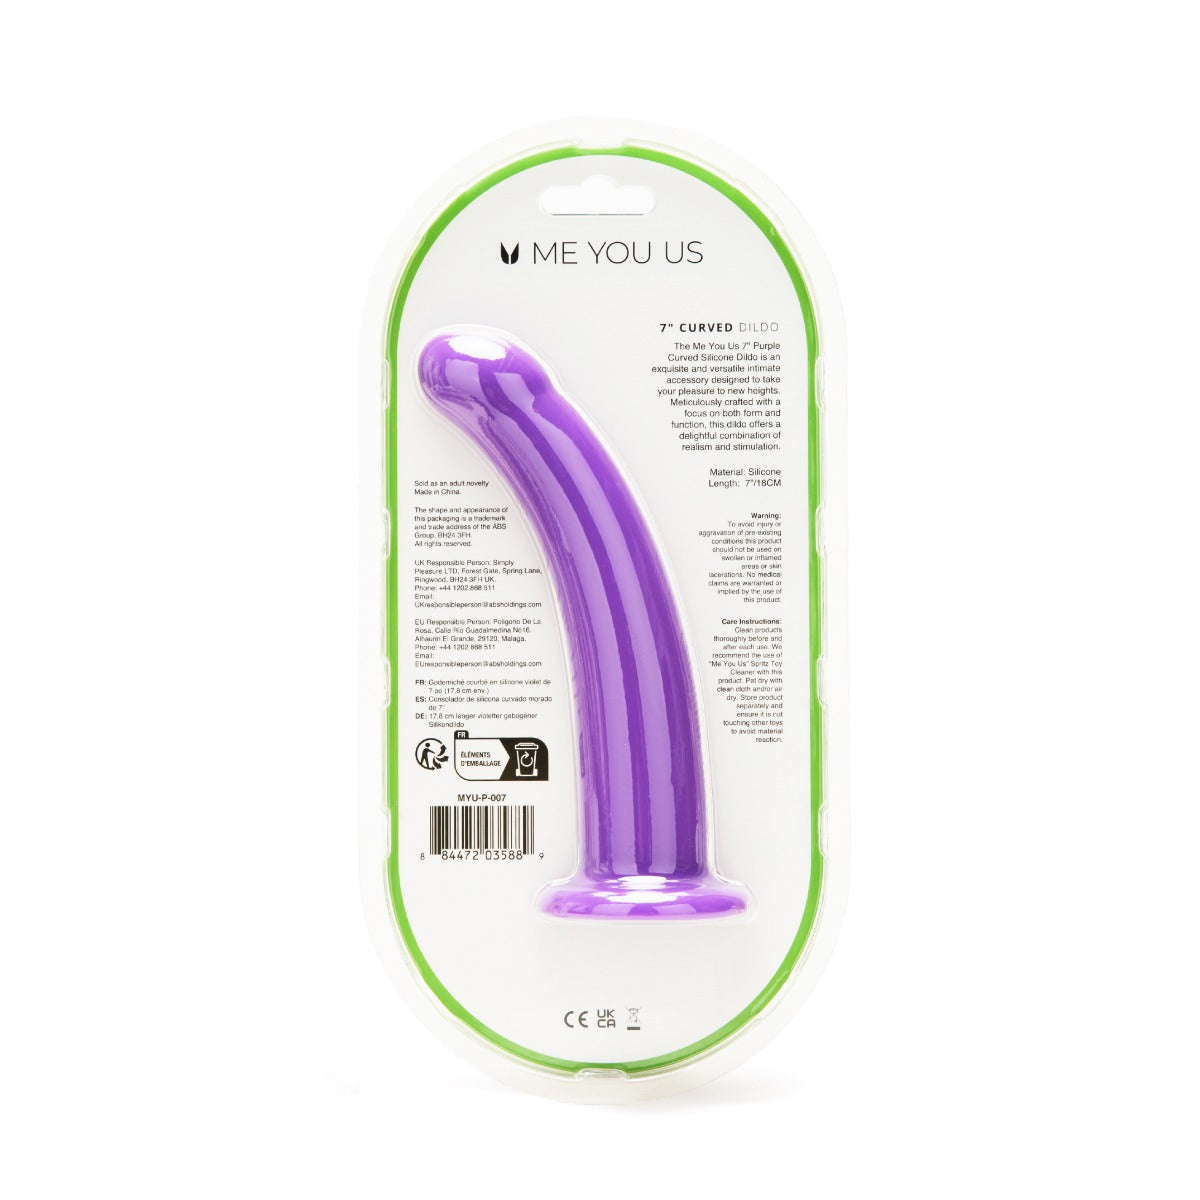 a purple plastic object in a package